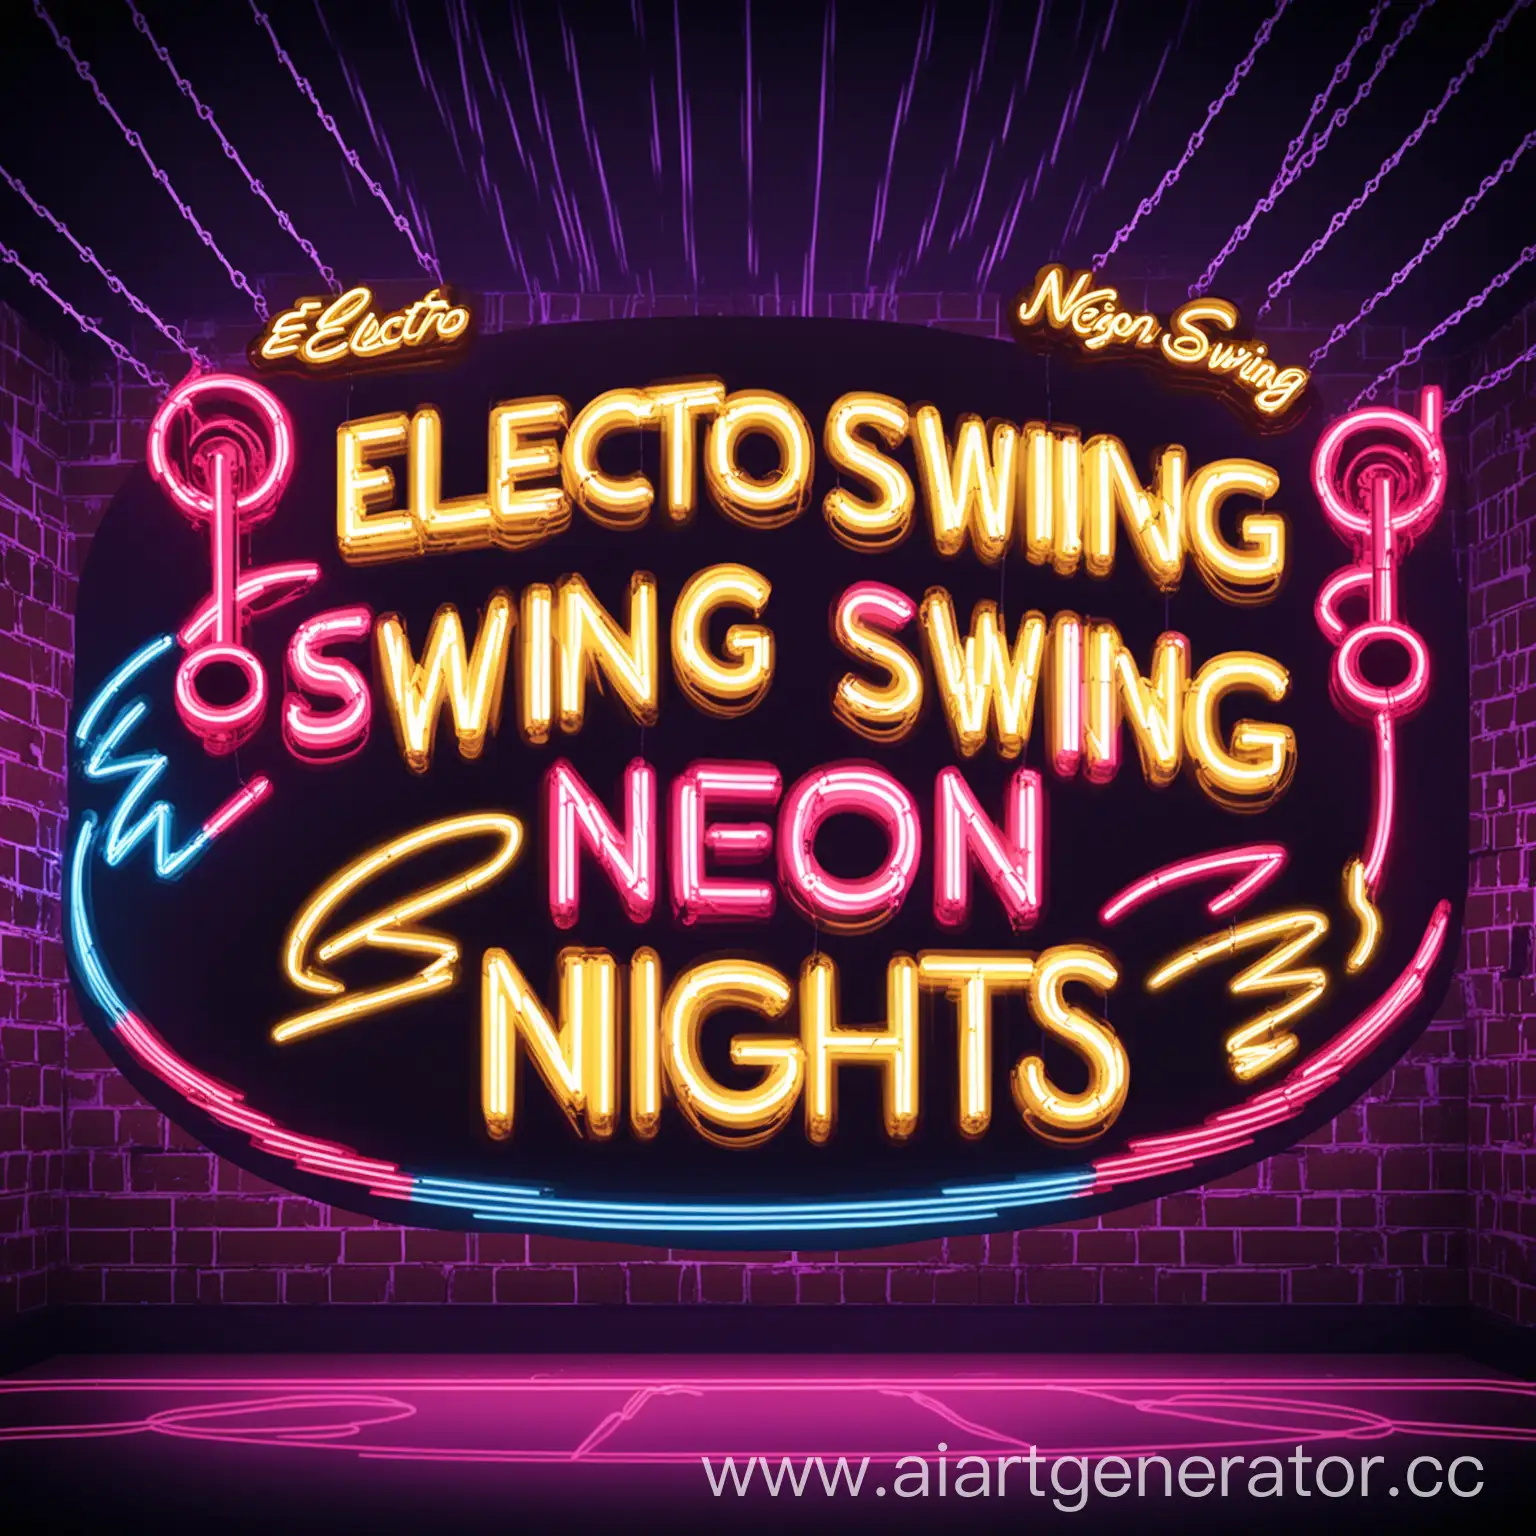 Electro swing Neon Swing Nights